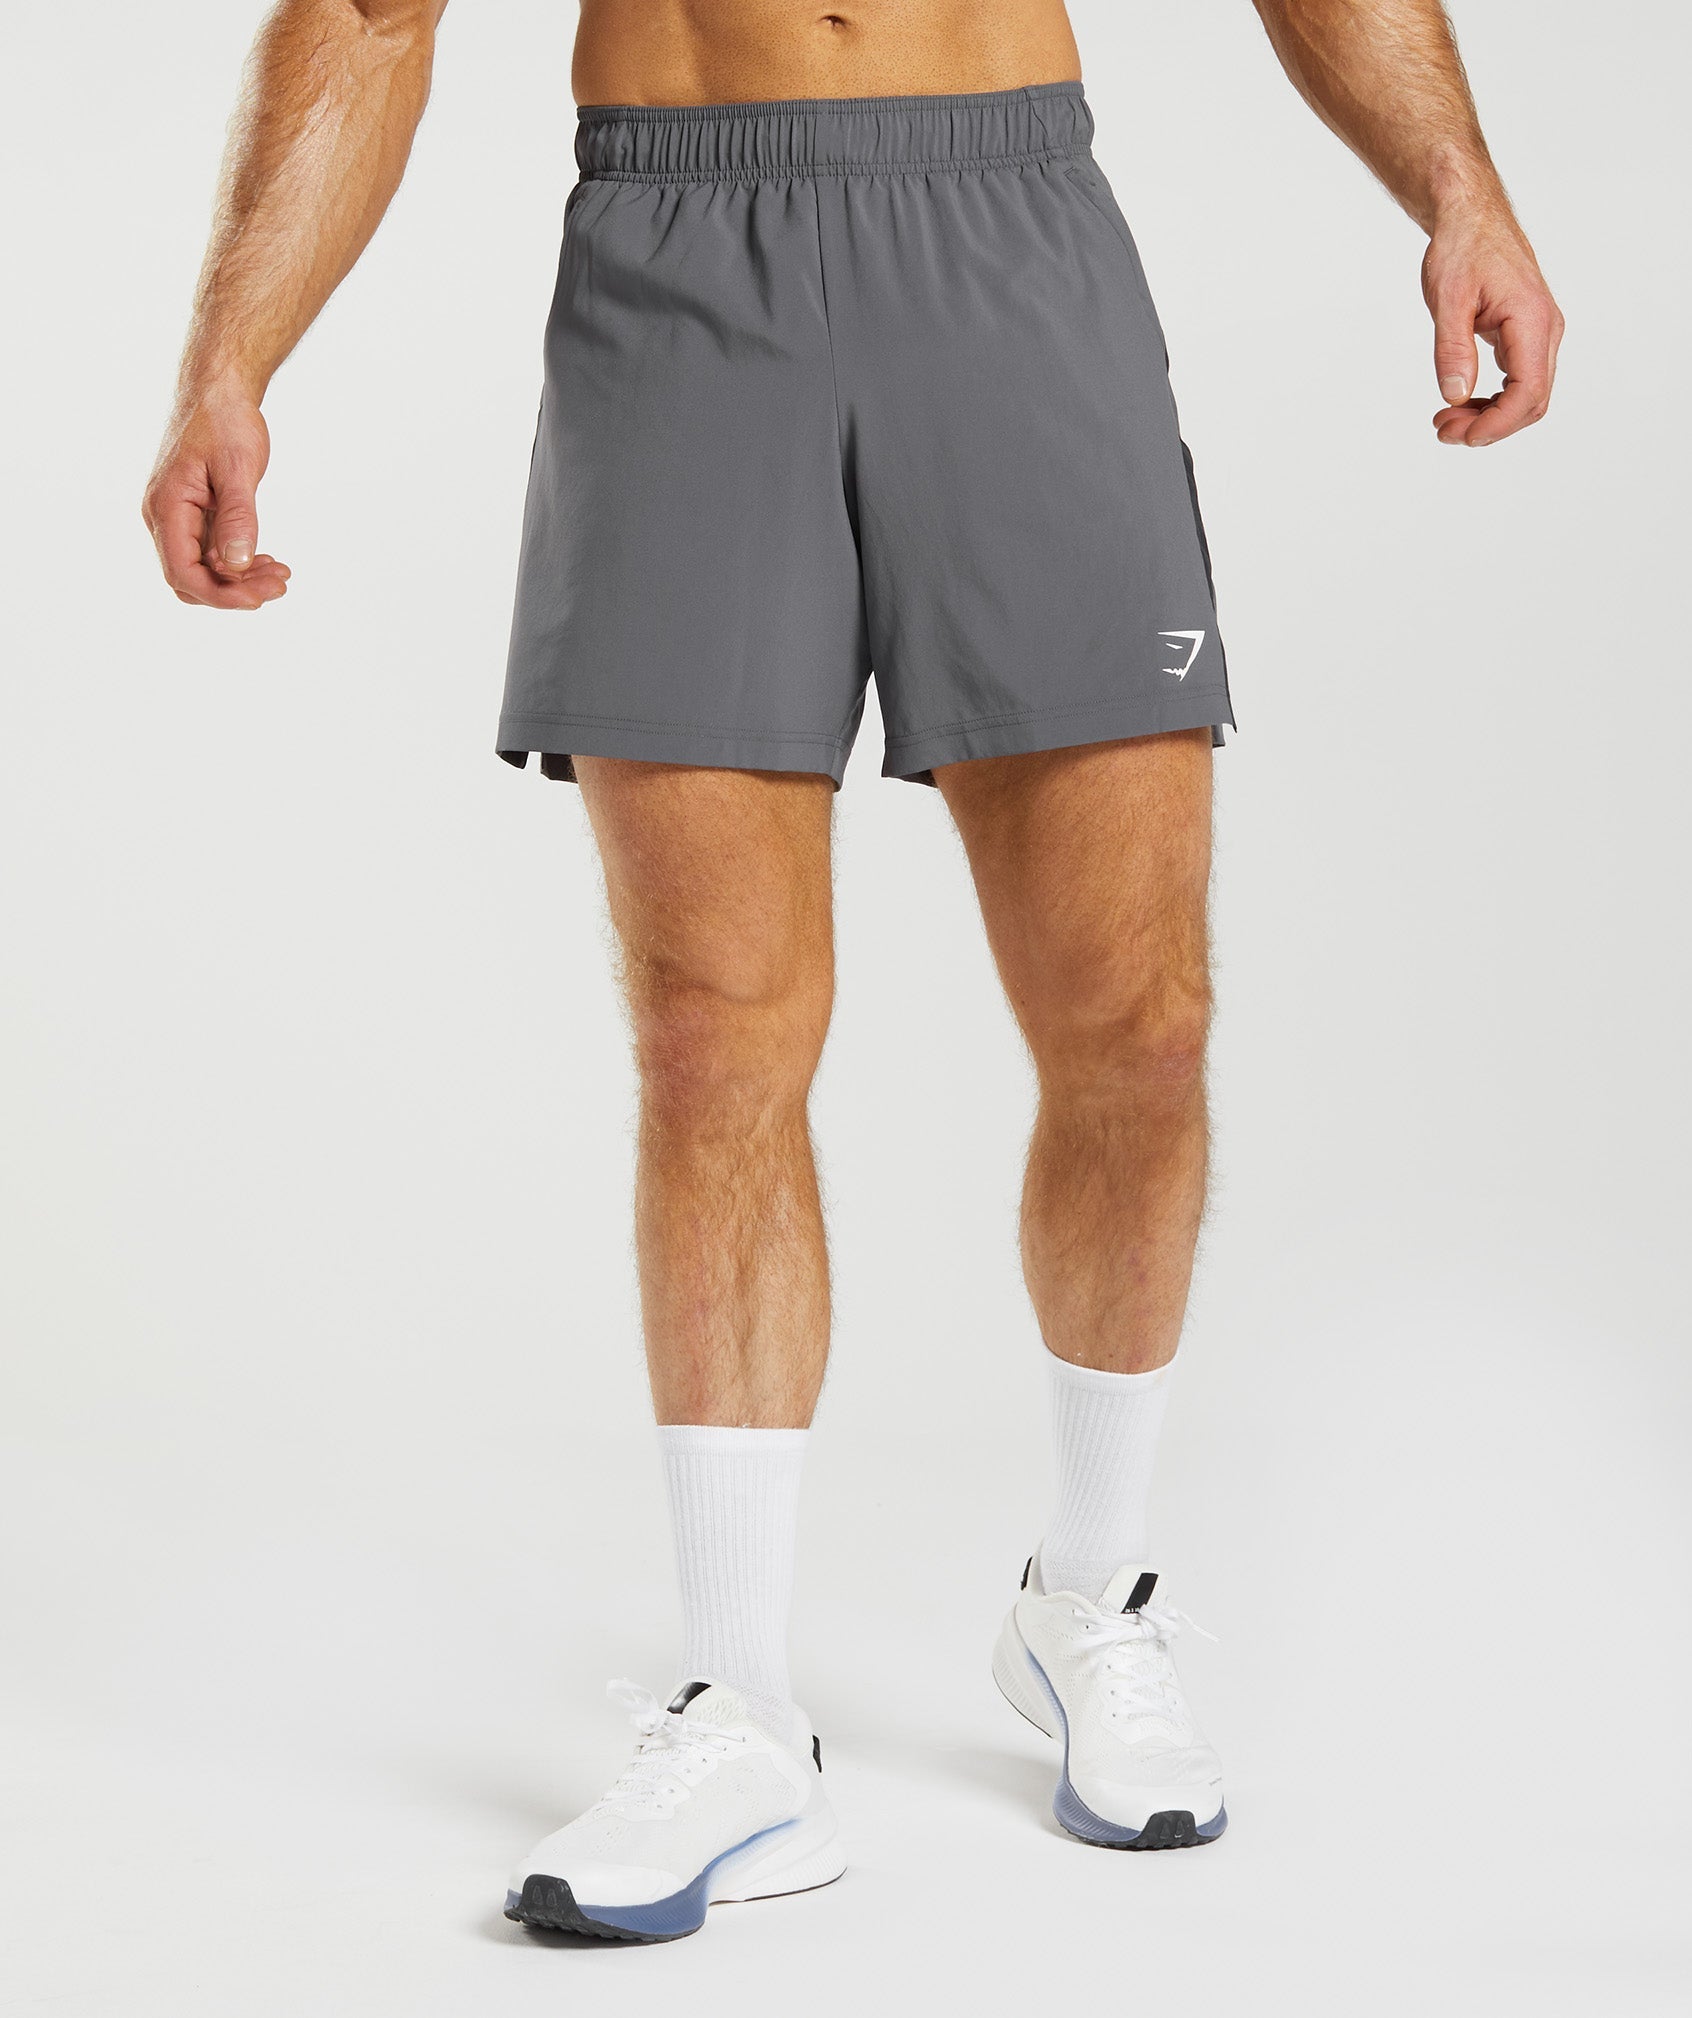 Gymshark Sport Shorts - Silhouette Grey/Black